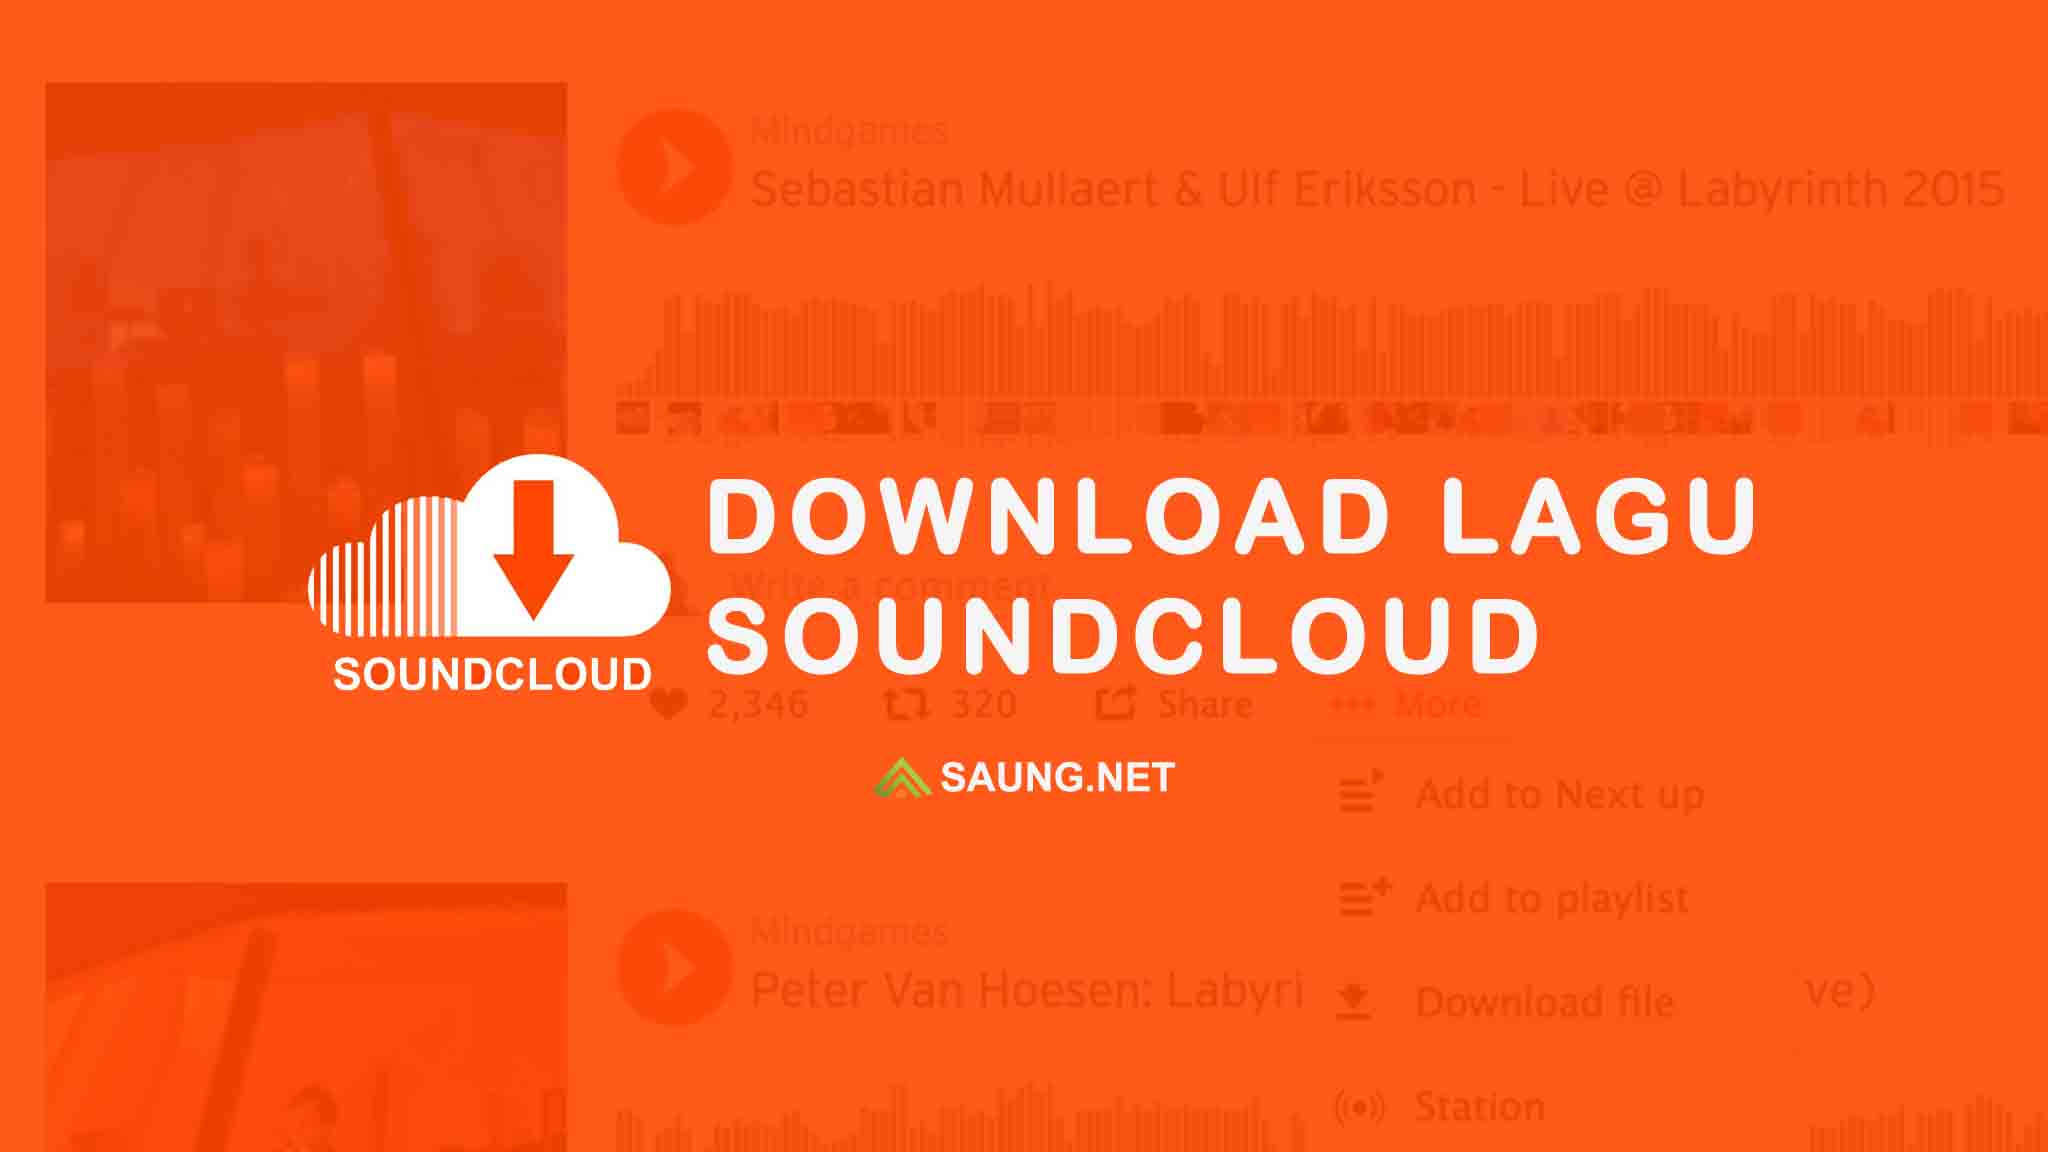 cara download lagu di soundcloud